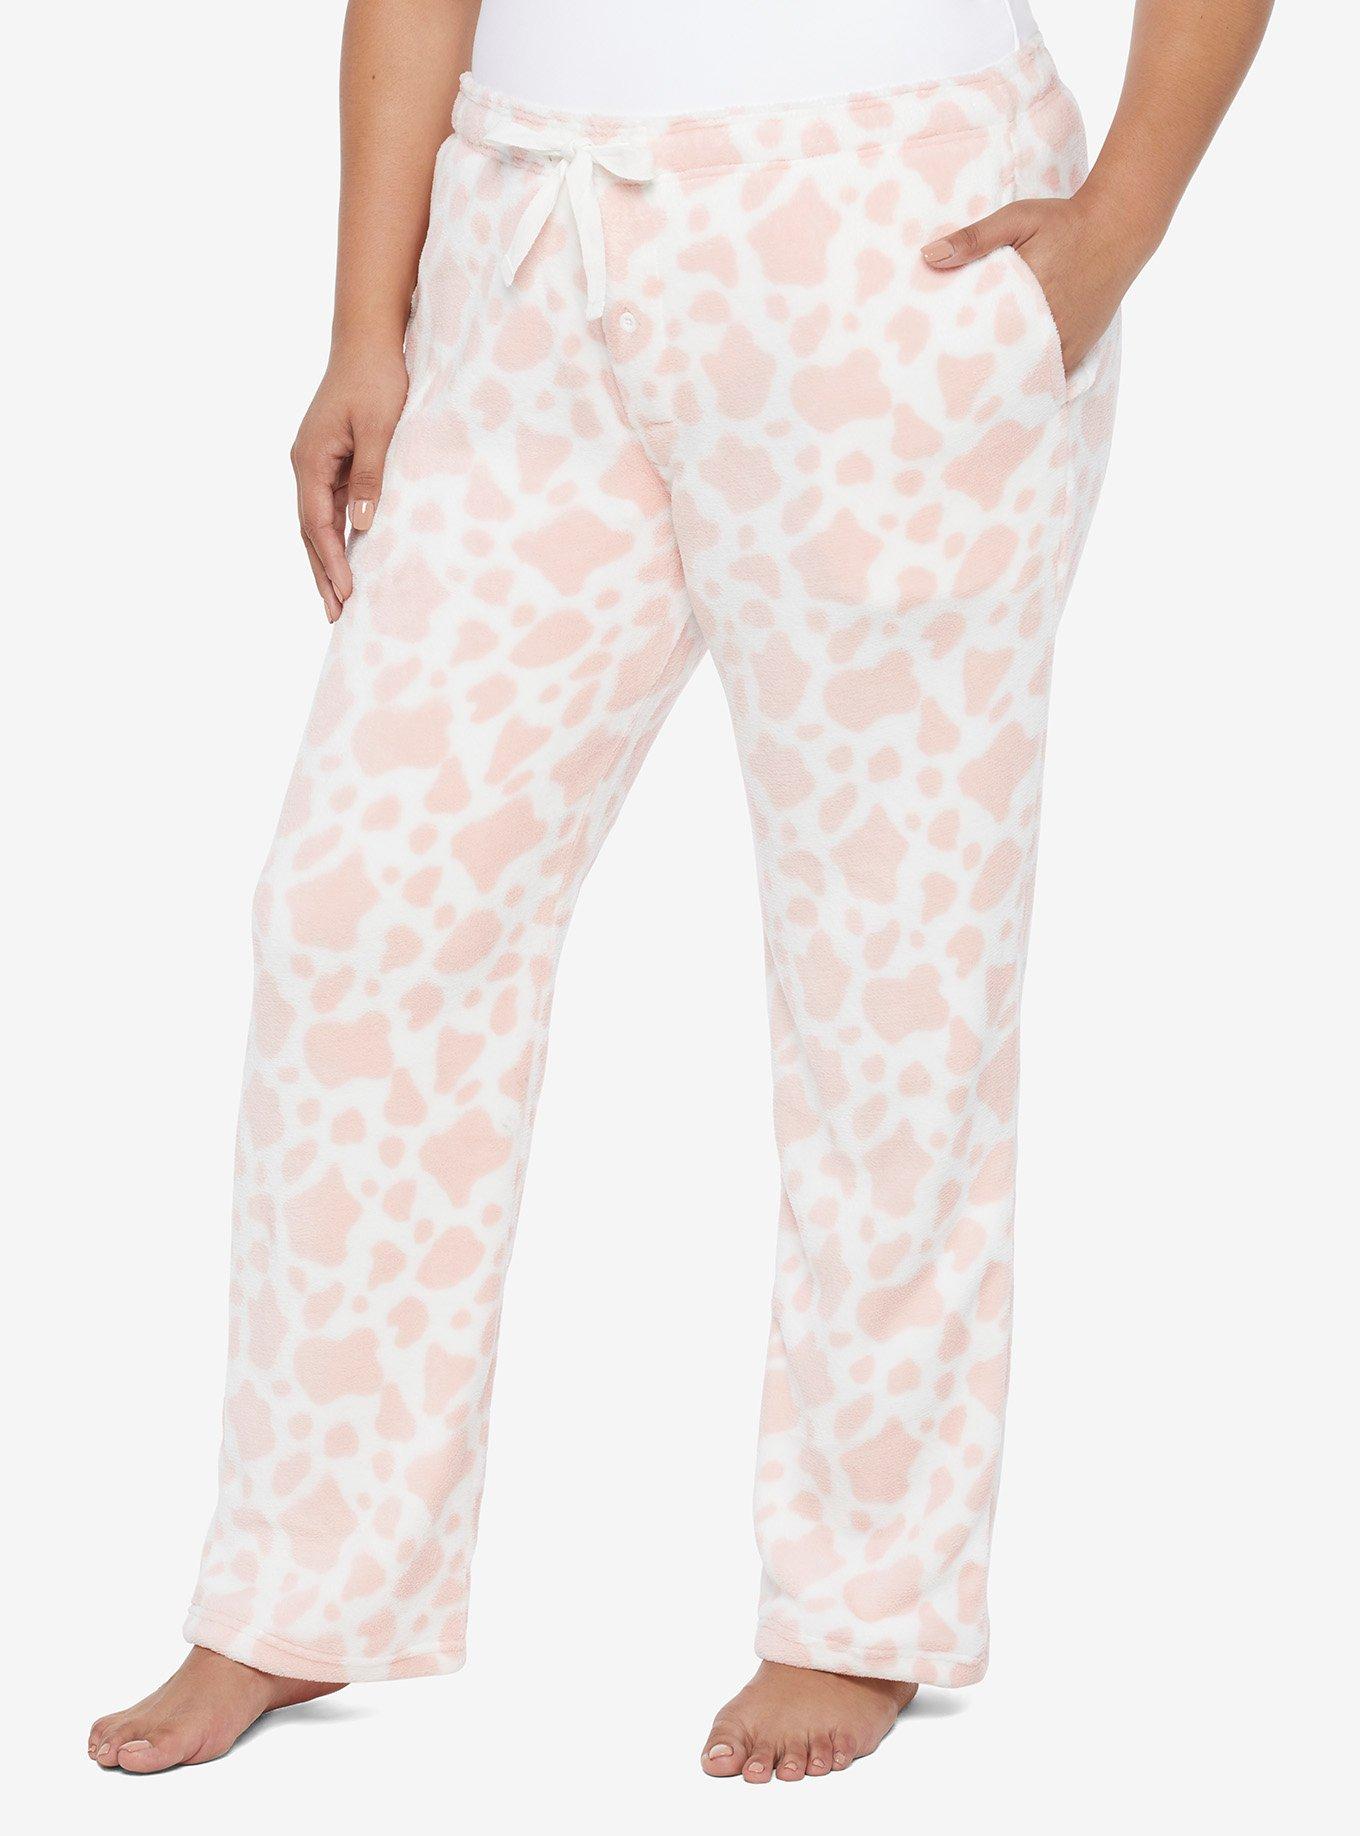 Pink Cow Fuzzy Pajama Pants Plus Size